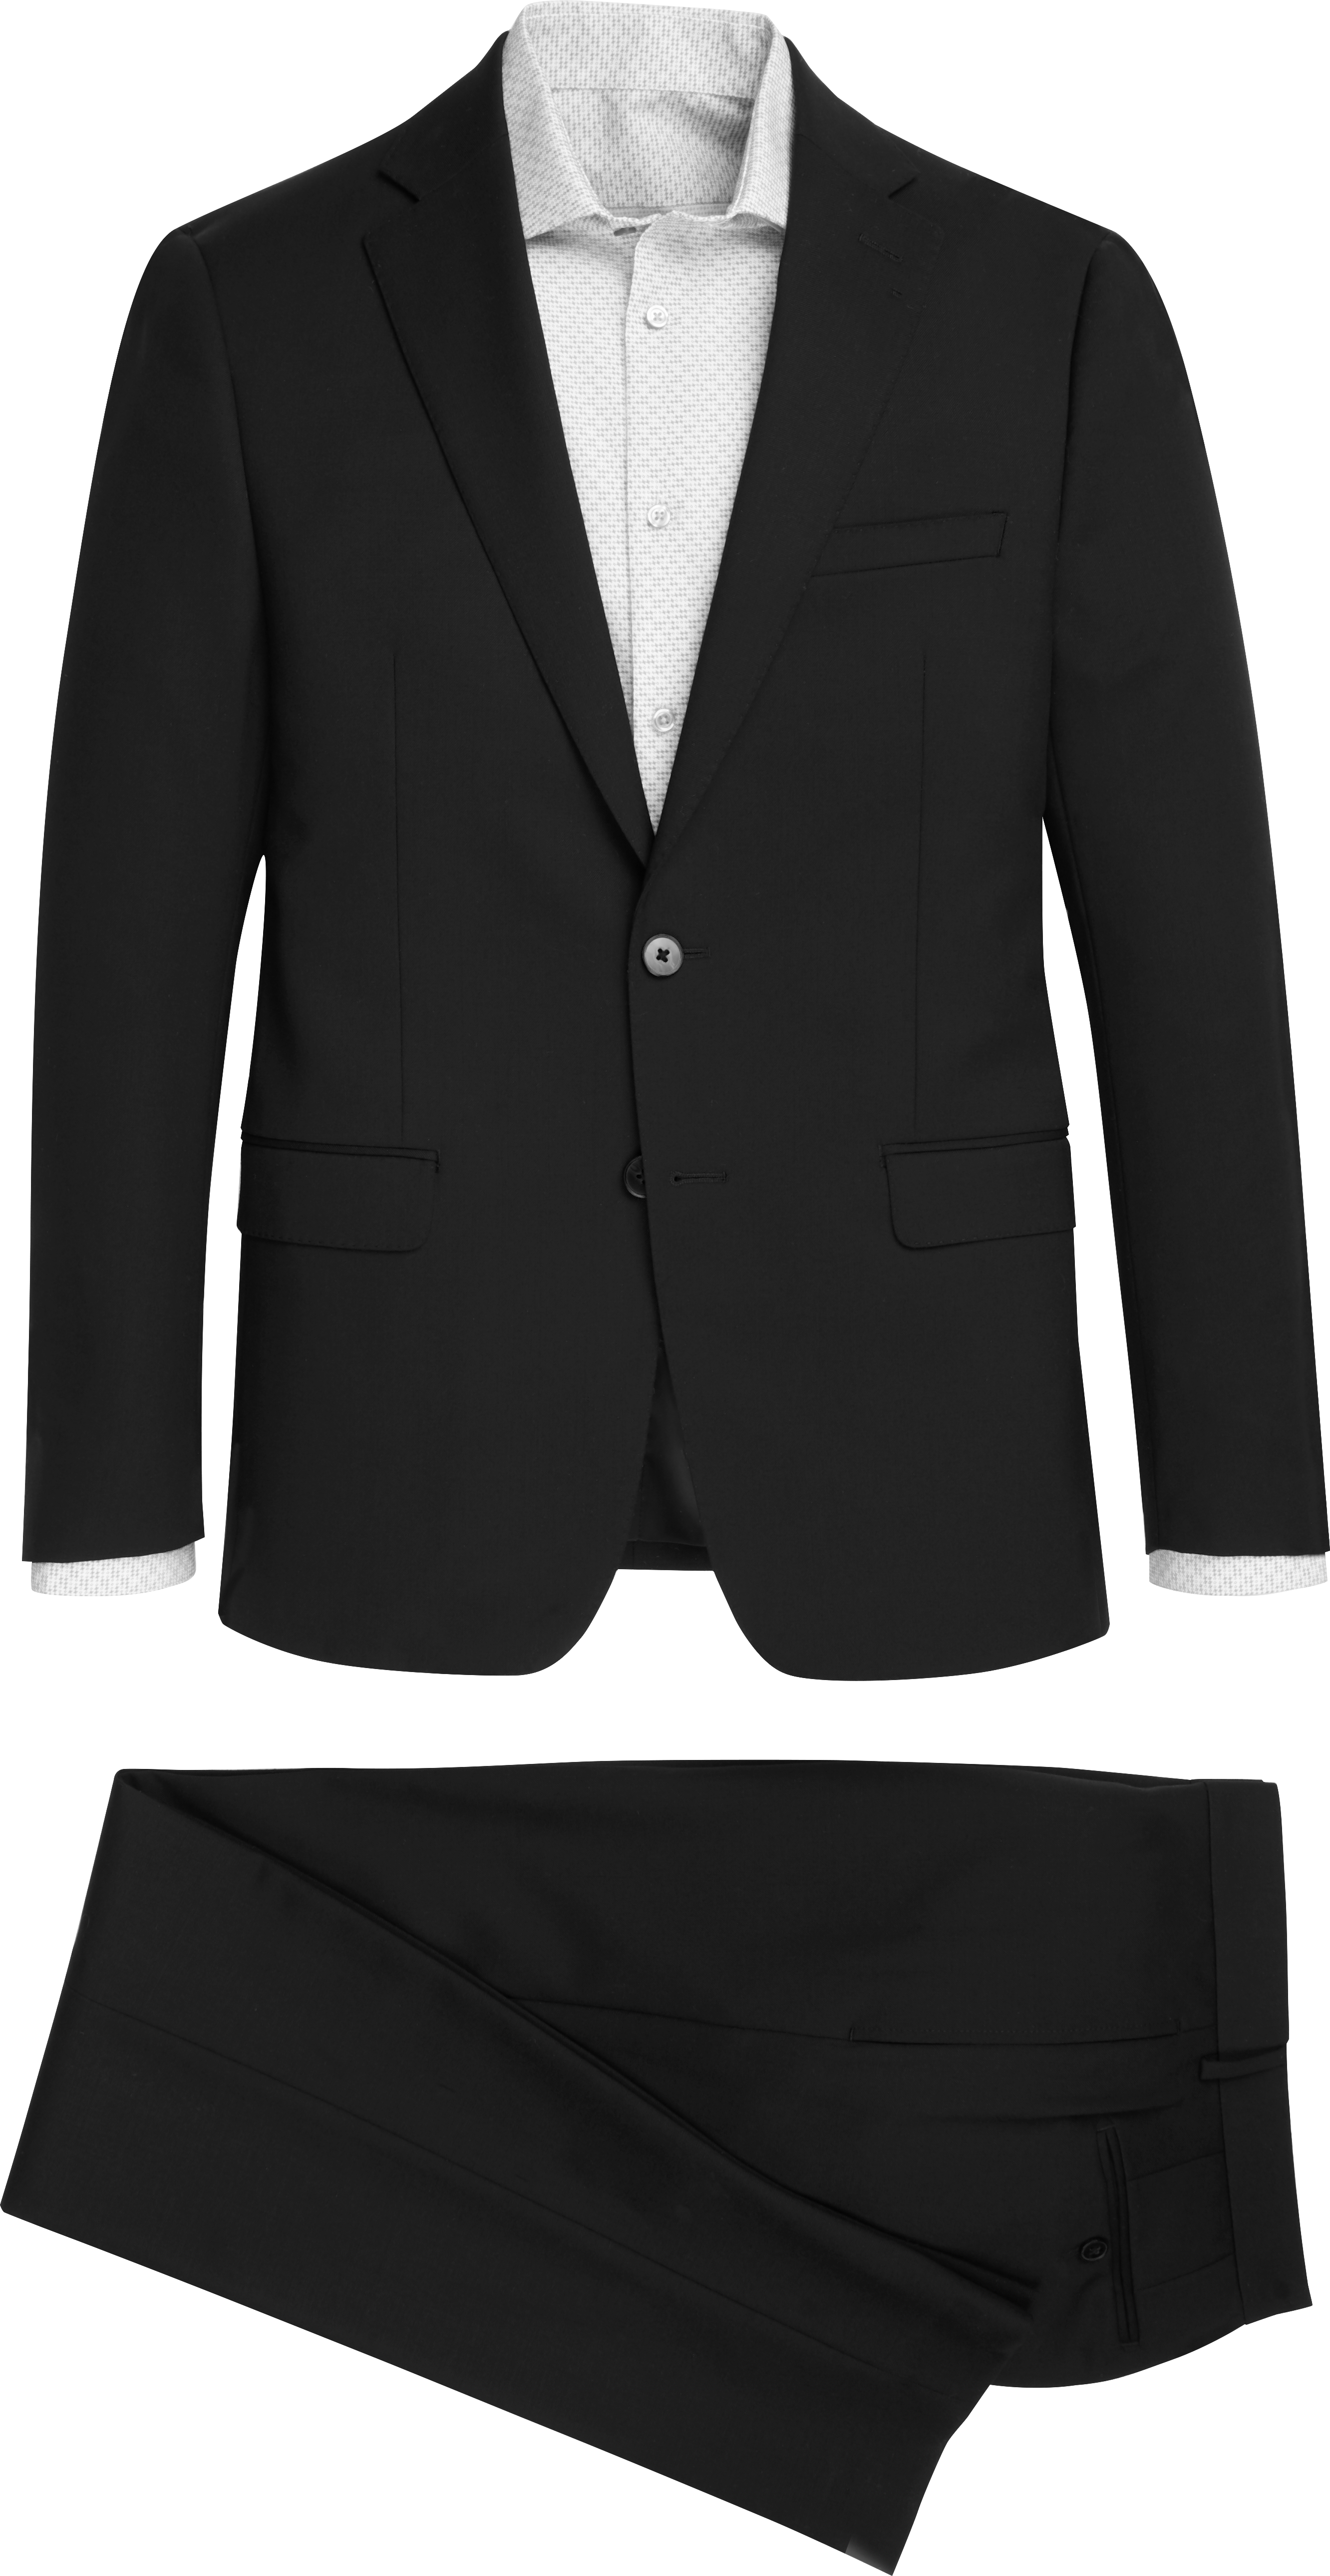 calvin klein black solid modern fit tuxedo jacket